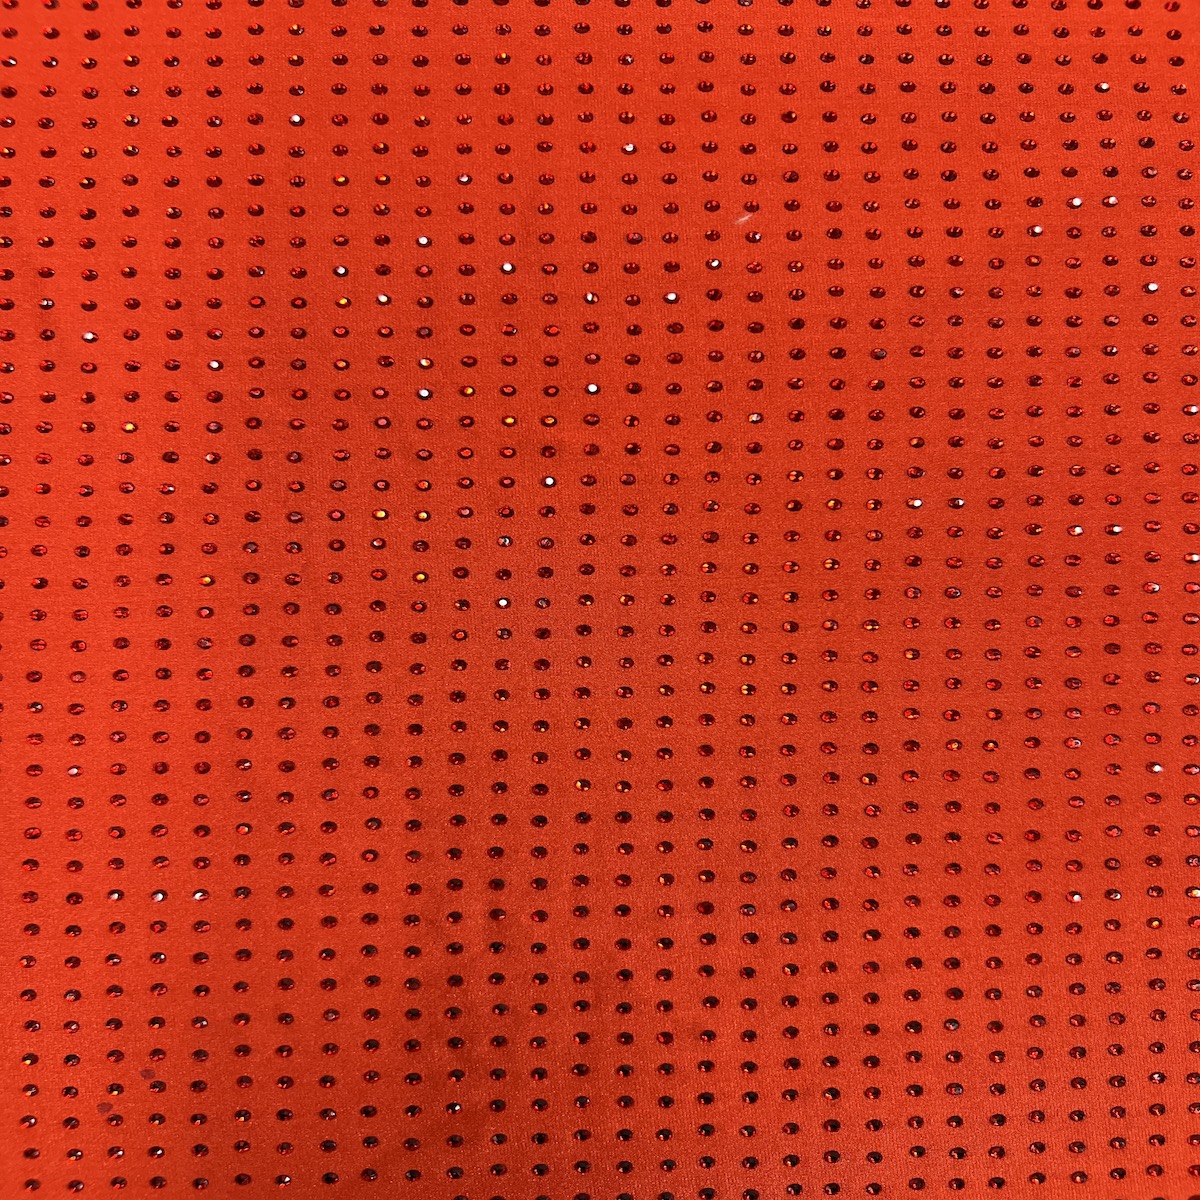 Red Rhinestone Spandex Fabric